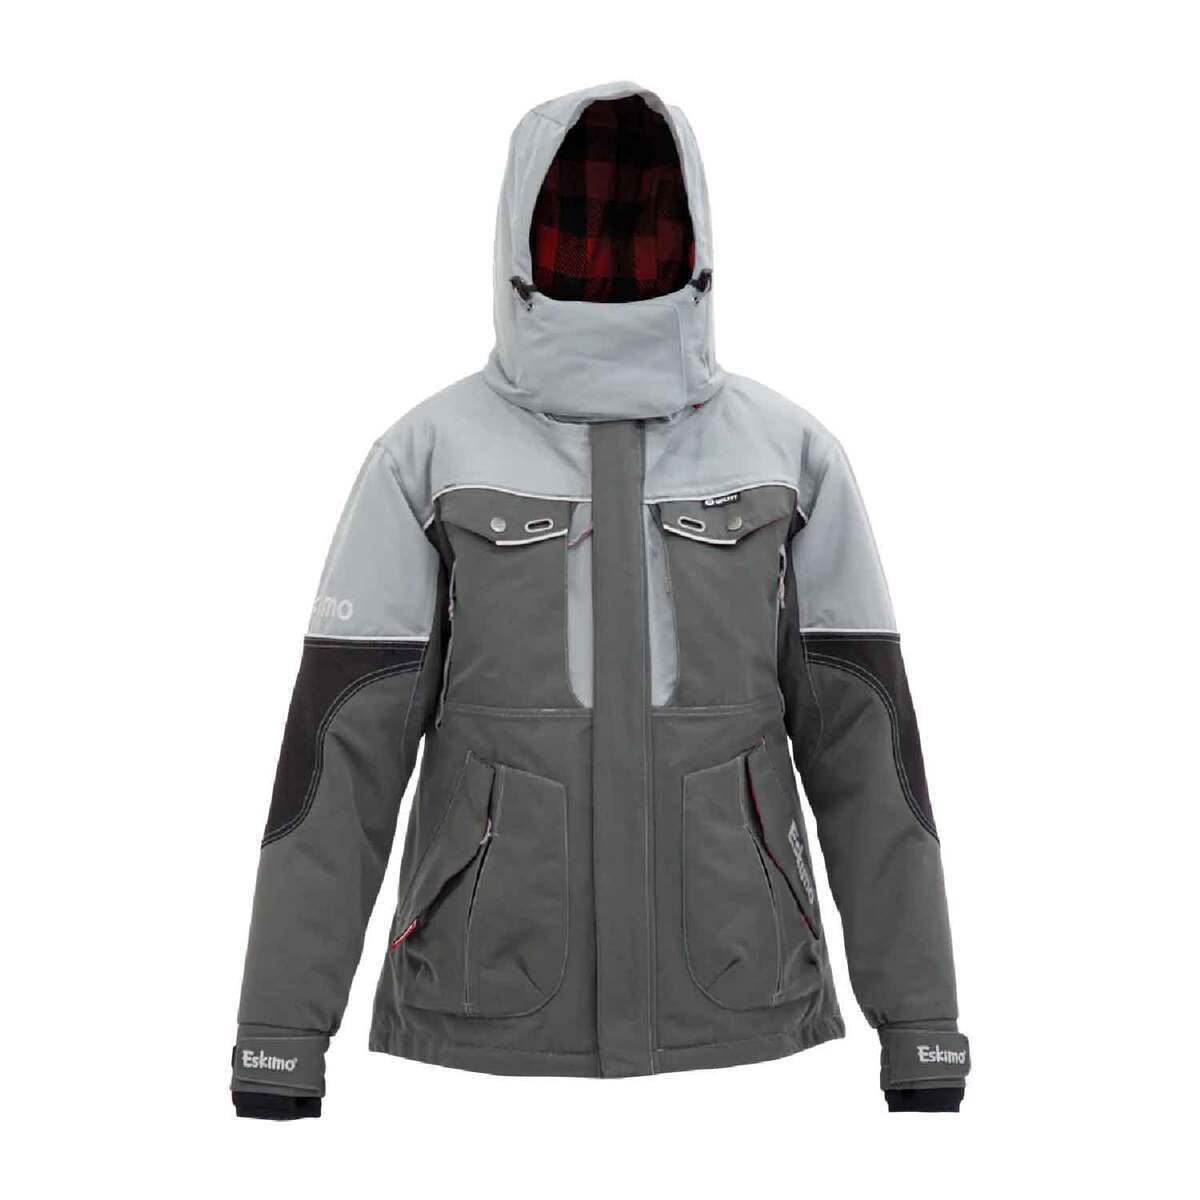 https://www.sportsmans.com/medias/eskimo-legend-jacket-womens-ice-fishing-jacket-gray-s-1783379-1.jpg?context=bWFzdGVyfGltYWdlc3w0Njc1NHxpbWFnZS9qcGVnfGFEZGhMMmhsWkM4eE1EZzROVGMzTmpNME16QTNNQzh4Tnpnek16YzVMVEZmWW1GelpTMWpiMjUyWlhKemFXOXVSbTl5YldGMFh6RXlNREF0WTI5dWRtVnljMmx2YmtadmNtMWhkQXw2ZDg0M2U1MmE1NzI5MTE2OWExODU5YjM0ZDA3NDdmN2EwZTRkODQyYjUyYWZhZjYyZTc4ZjJlNDA1MjIxMTA0